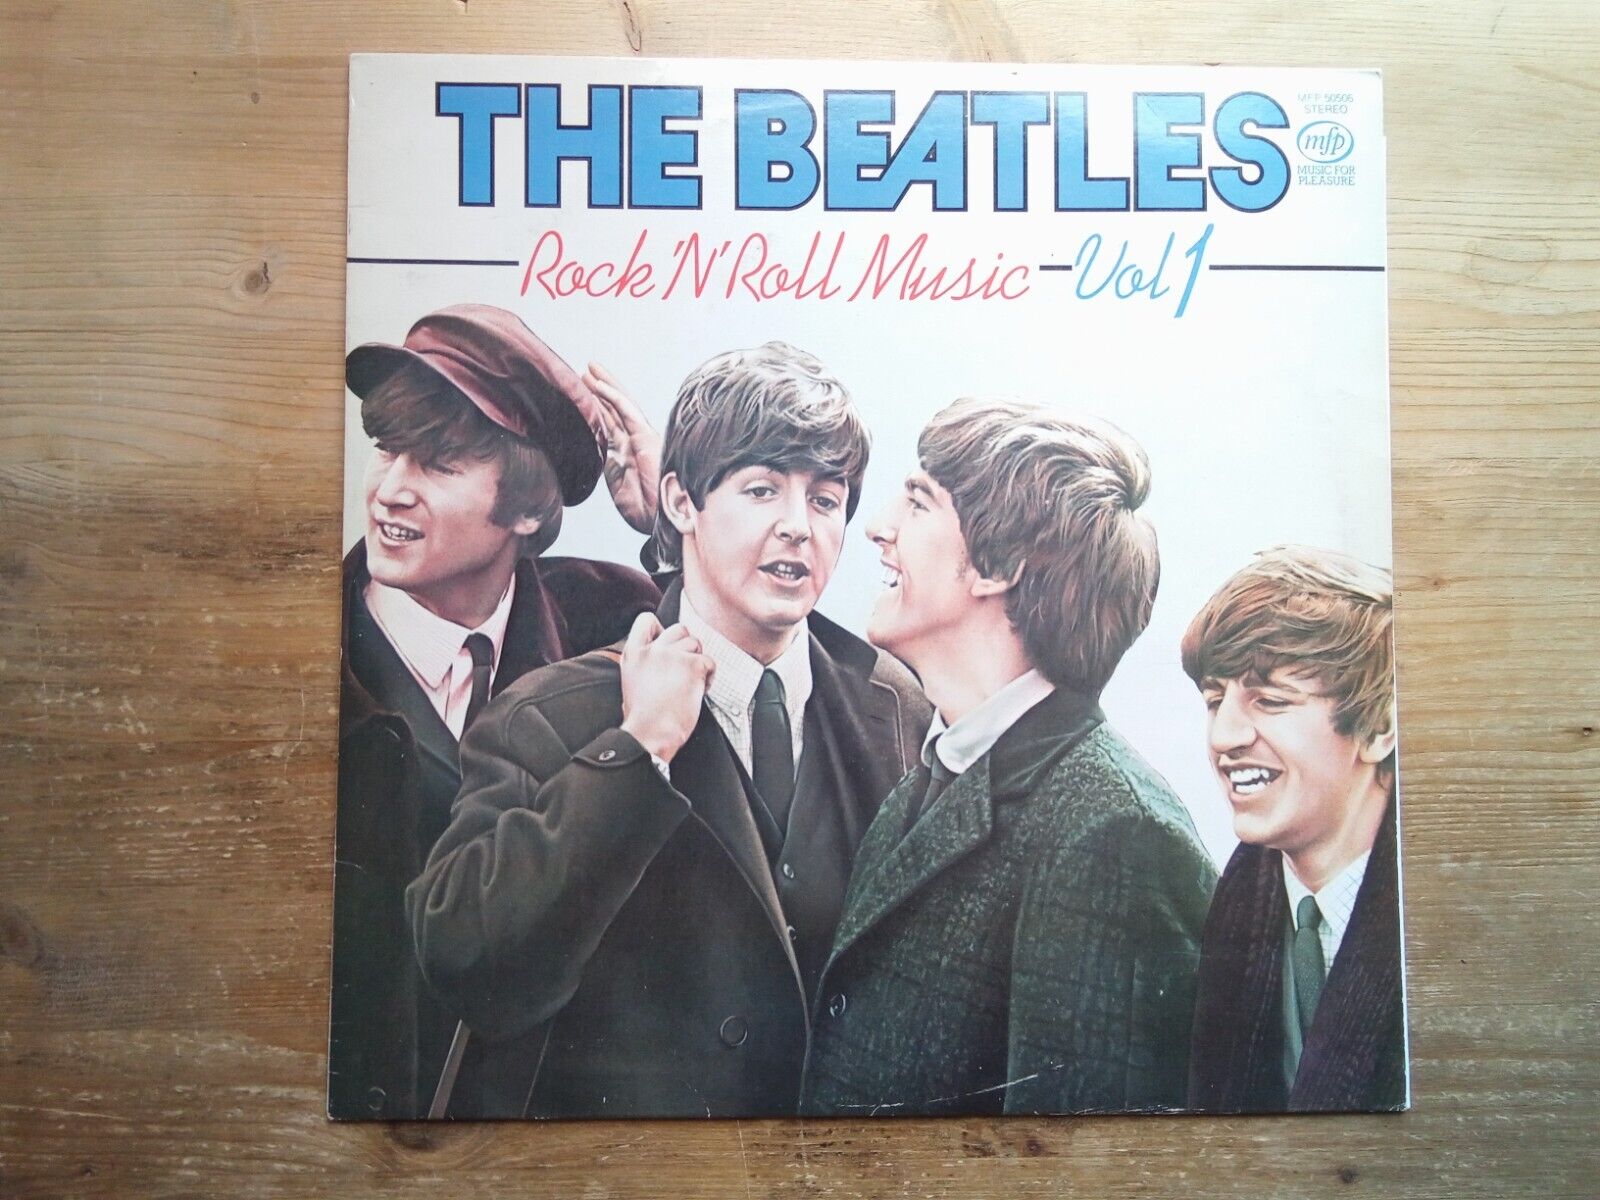 The Beatles Rock 'N' Roll Music Vol 1 Very Good Vinyl LP Record Album MFP 50506